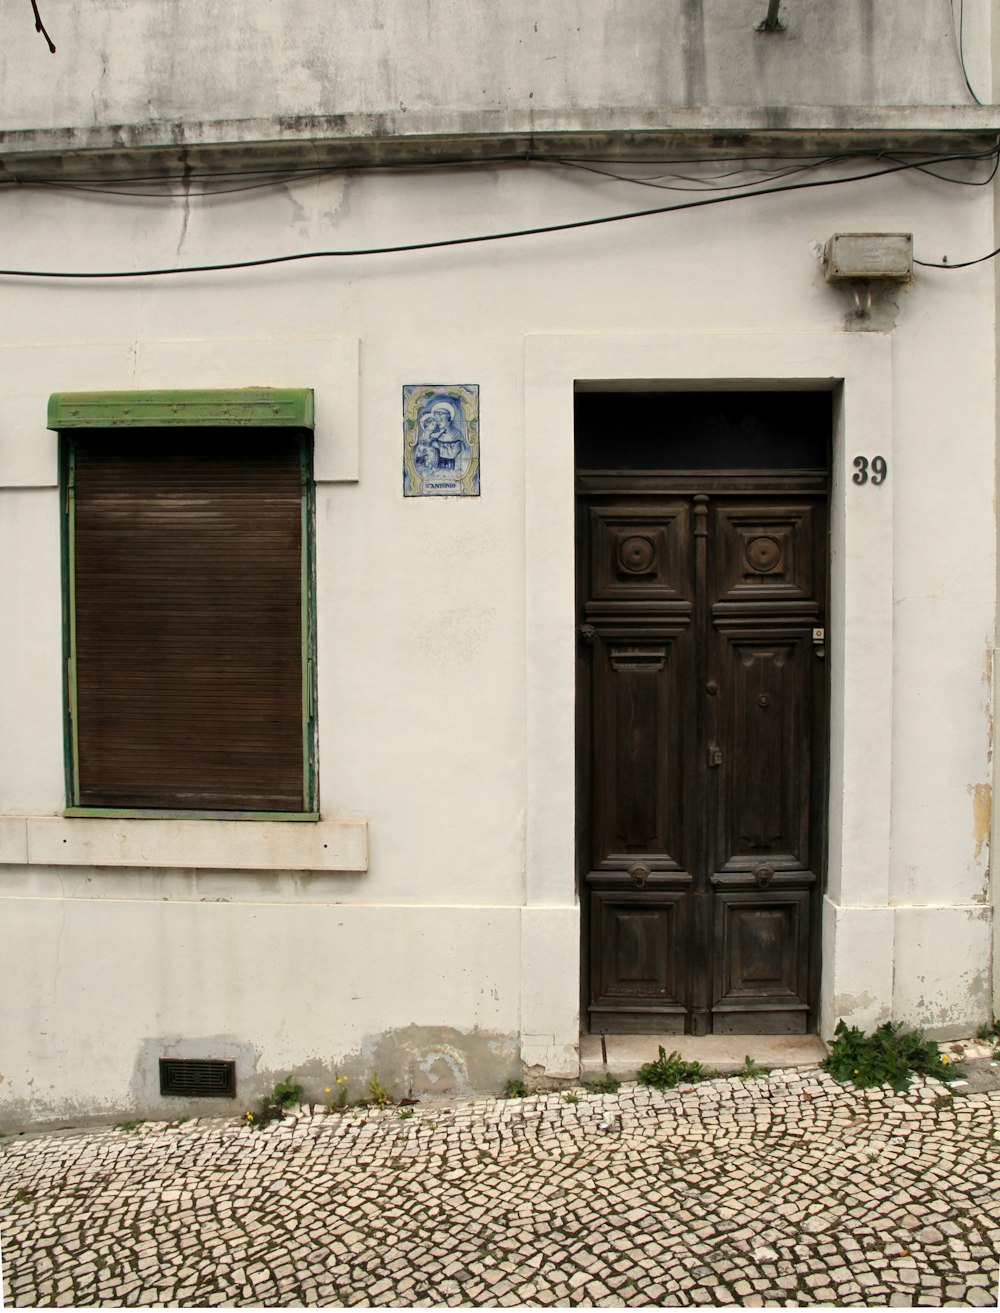 a building with a black door